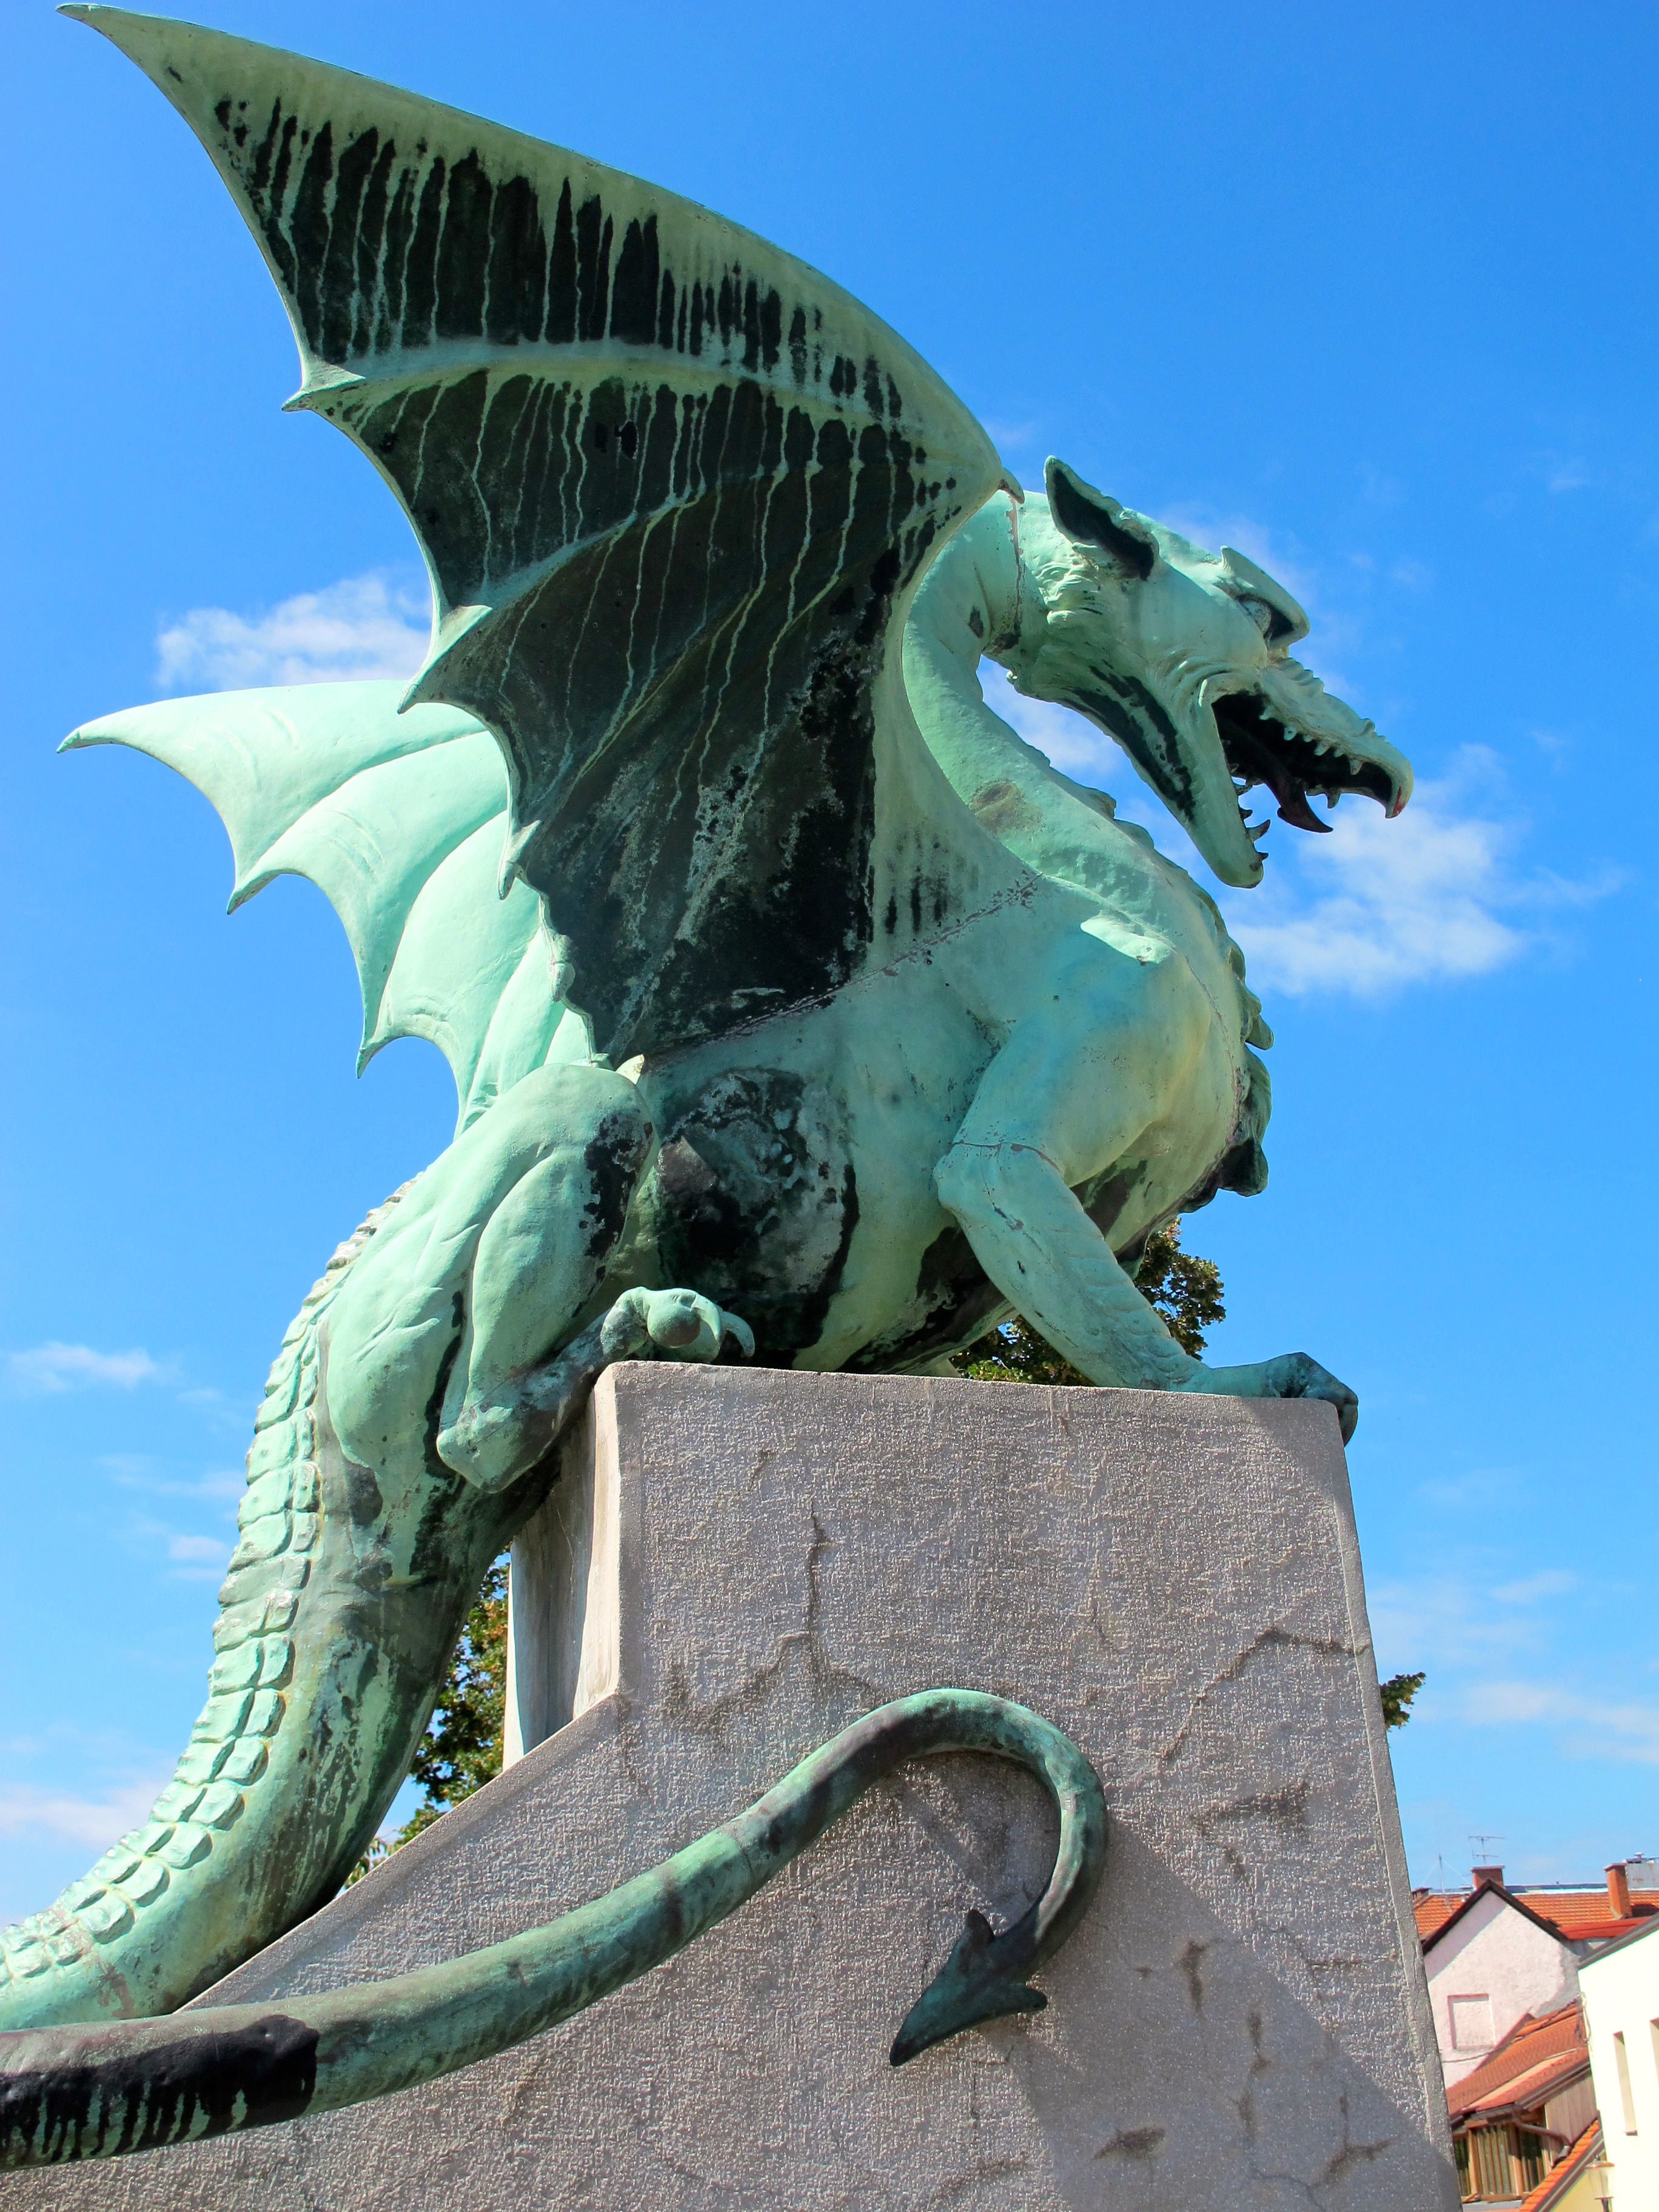 Ferocious dragons guard the bridges of Ljubljana.